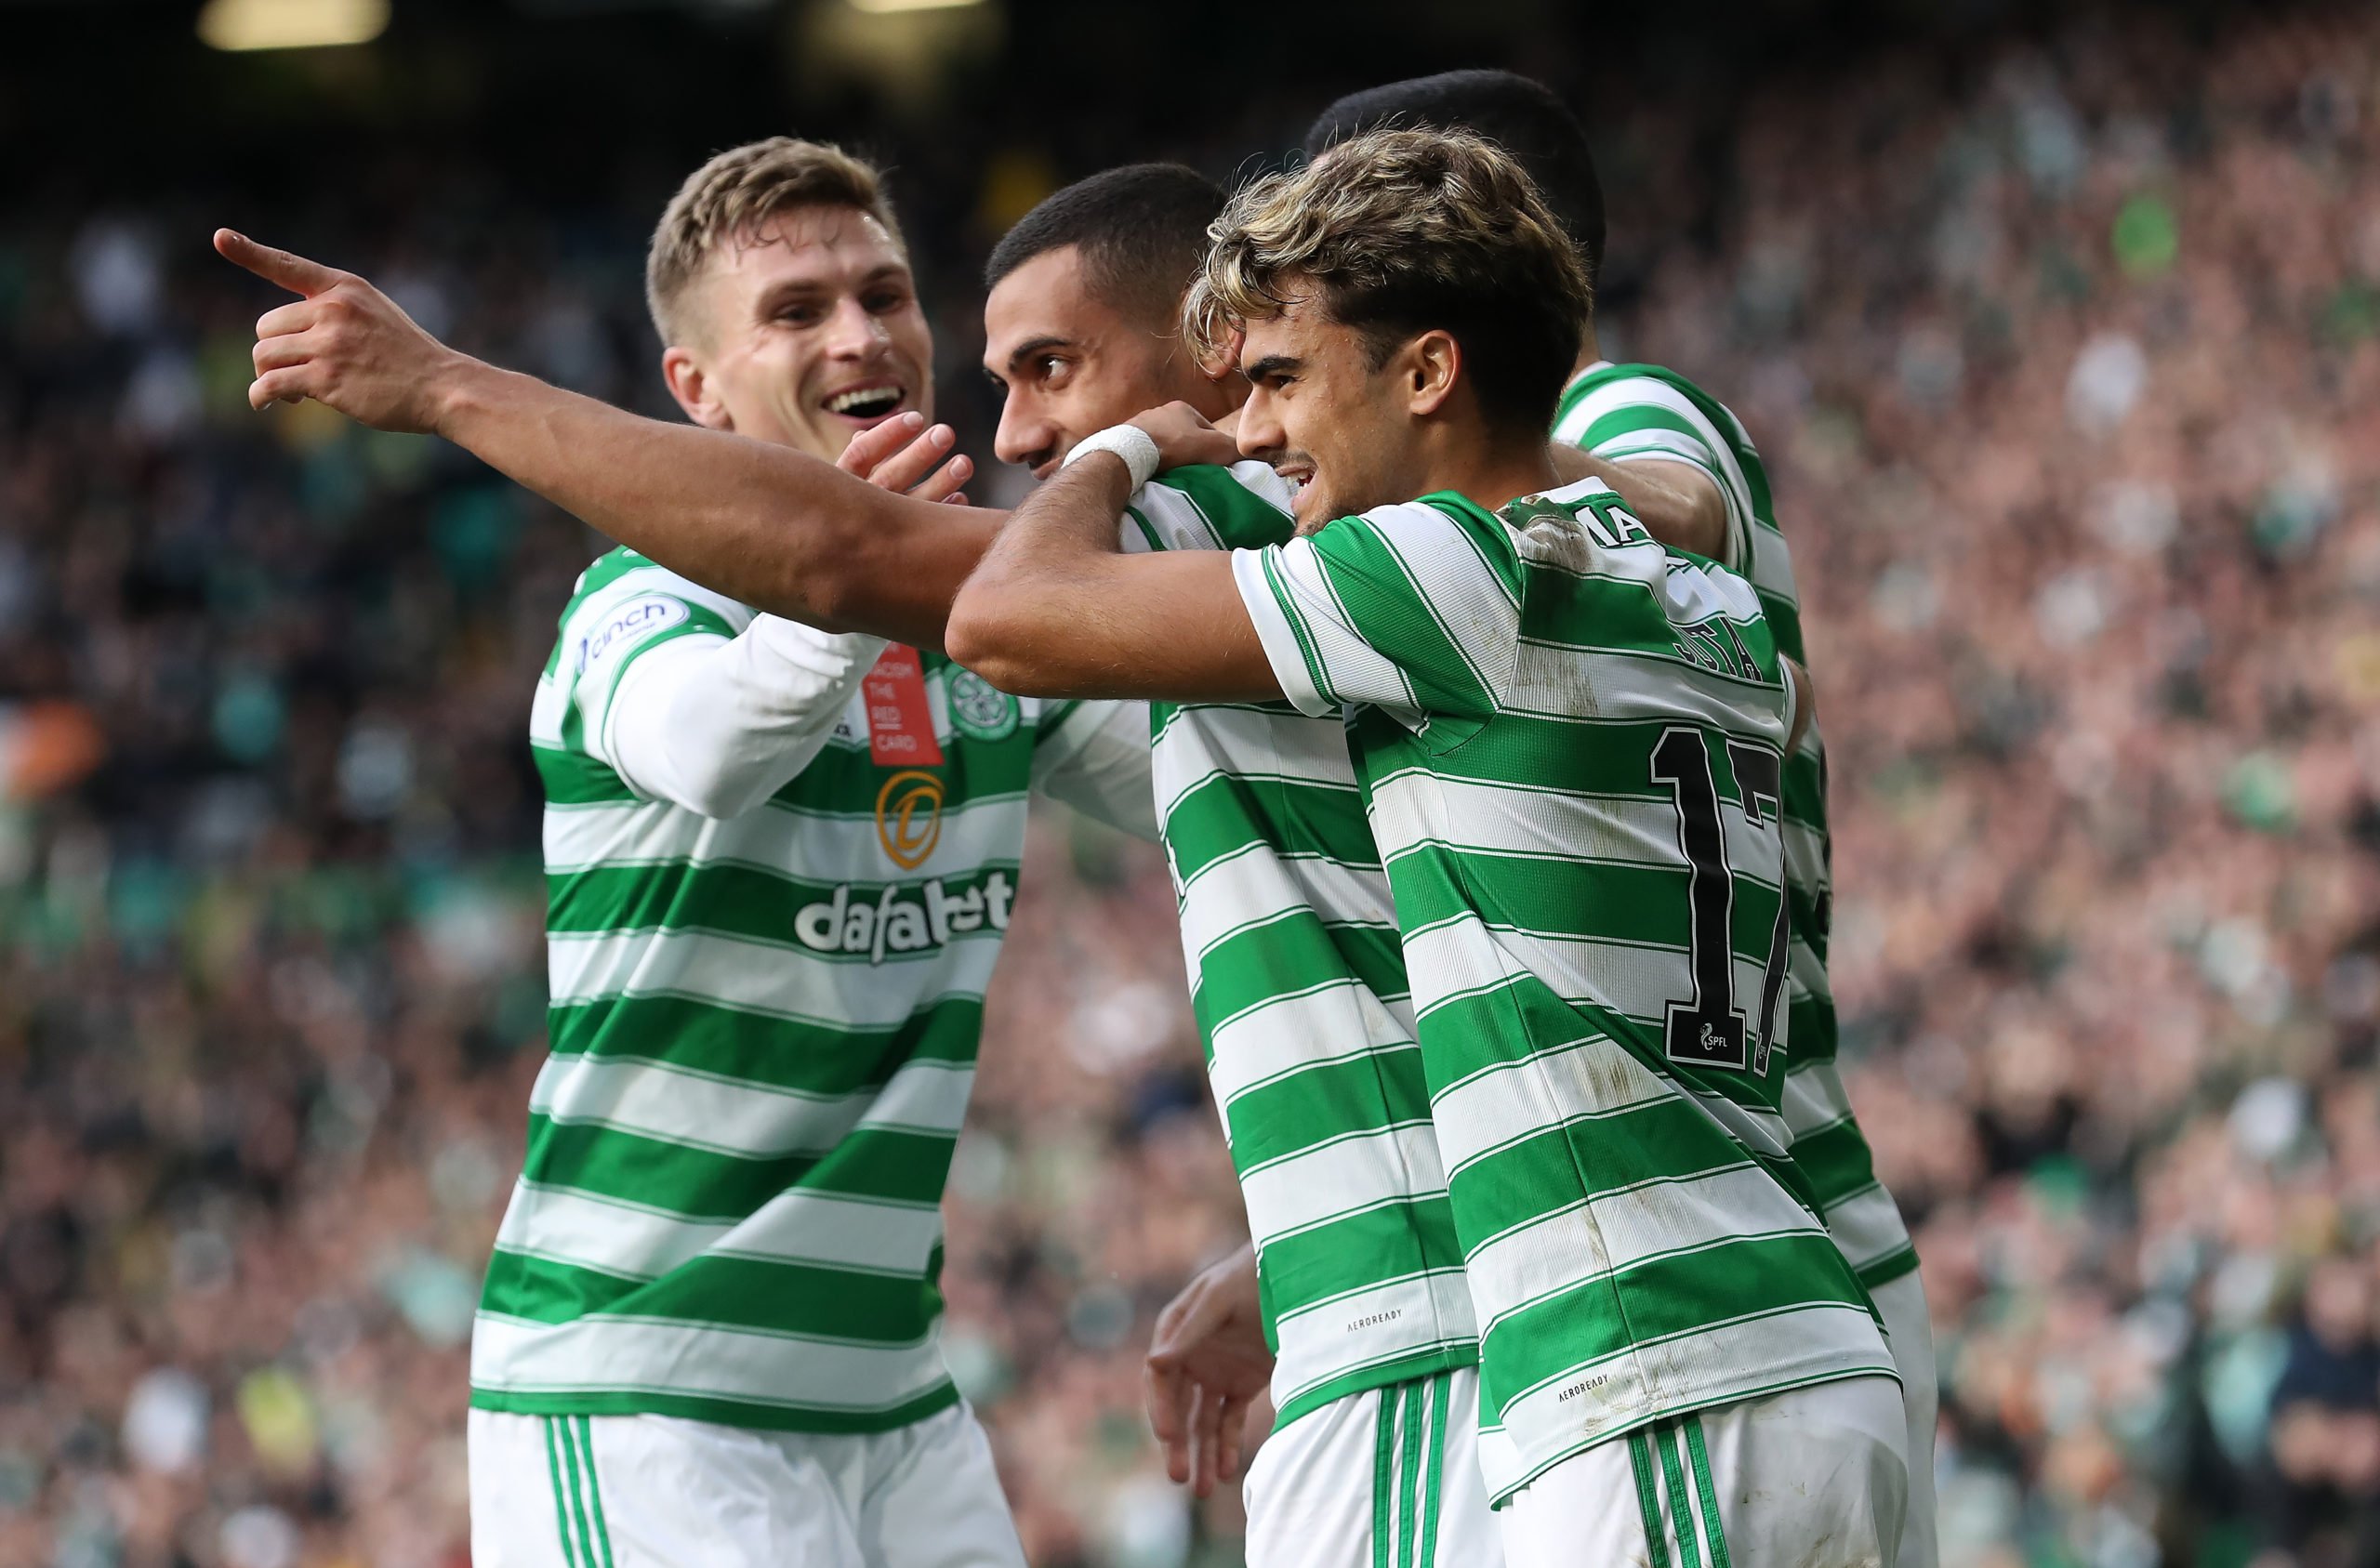 Celtic players celebrates a goal